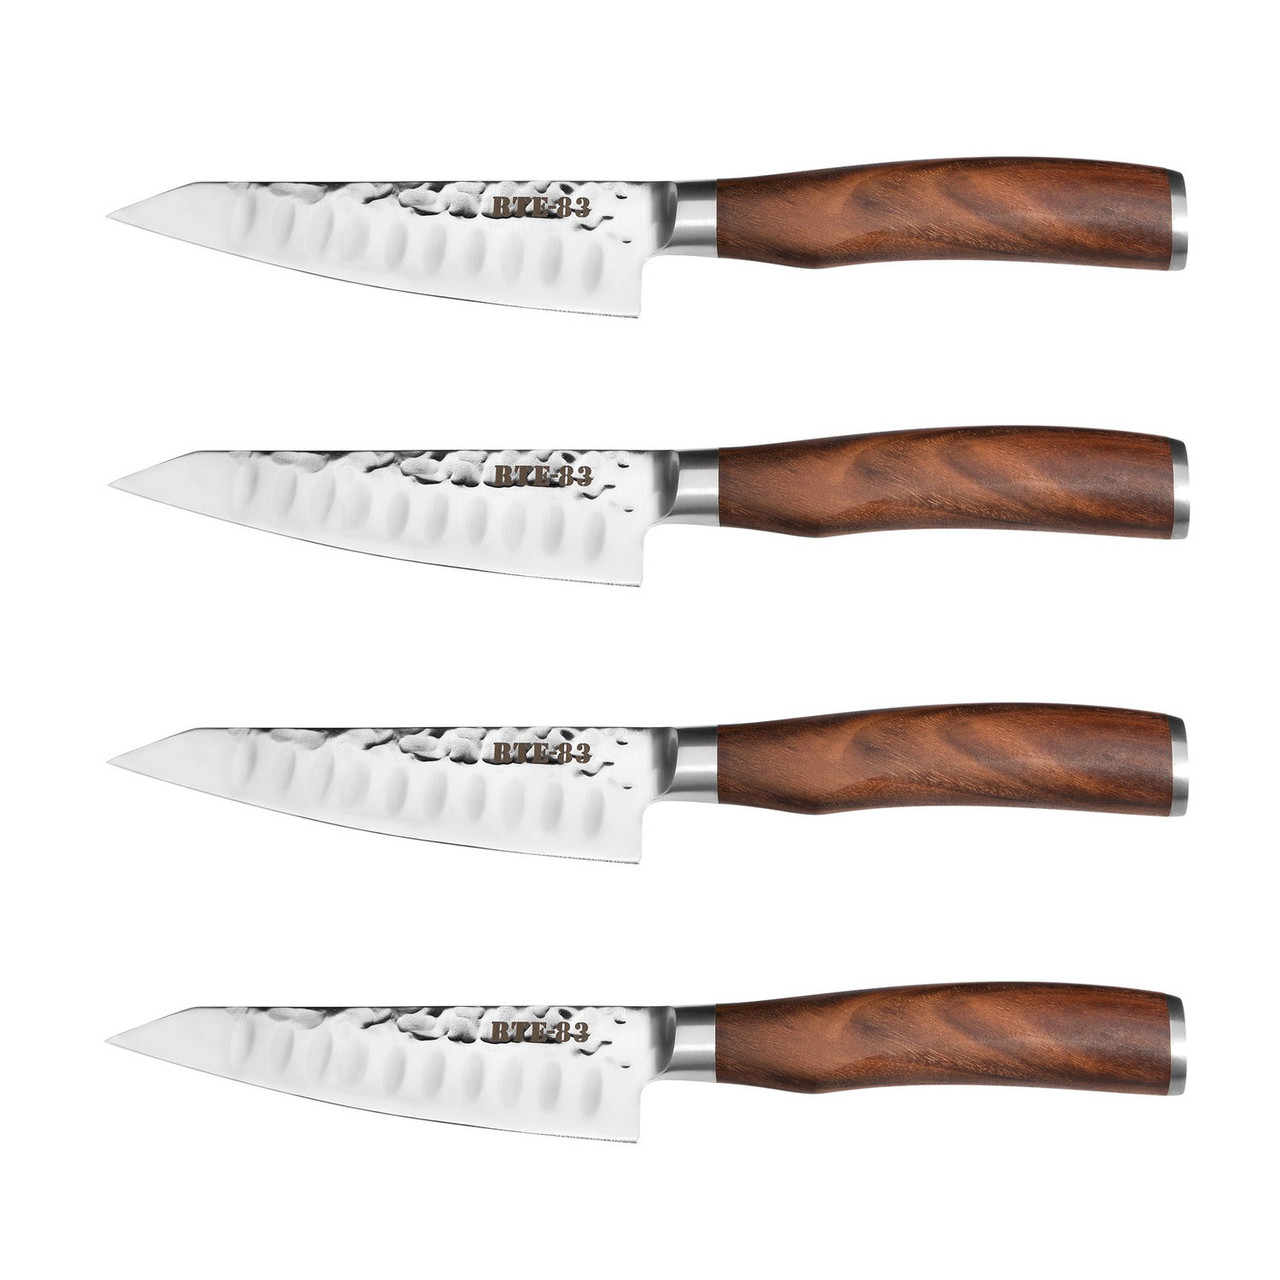 Wüsthof Classic Steak knife set